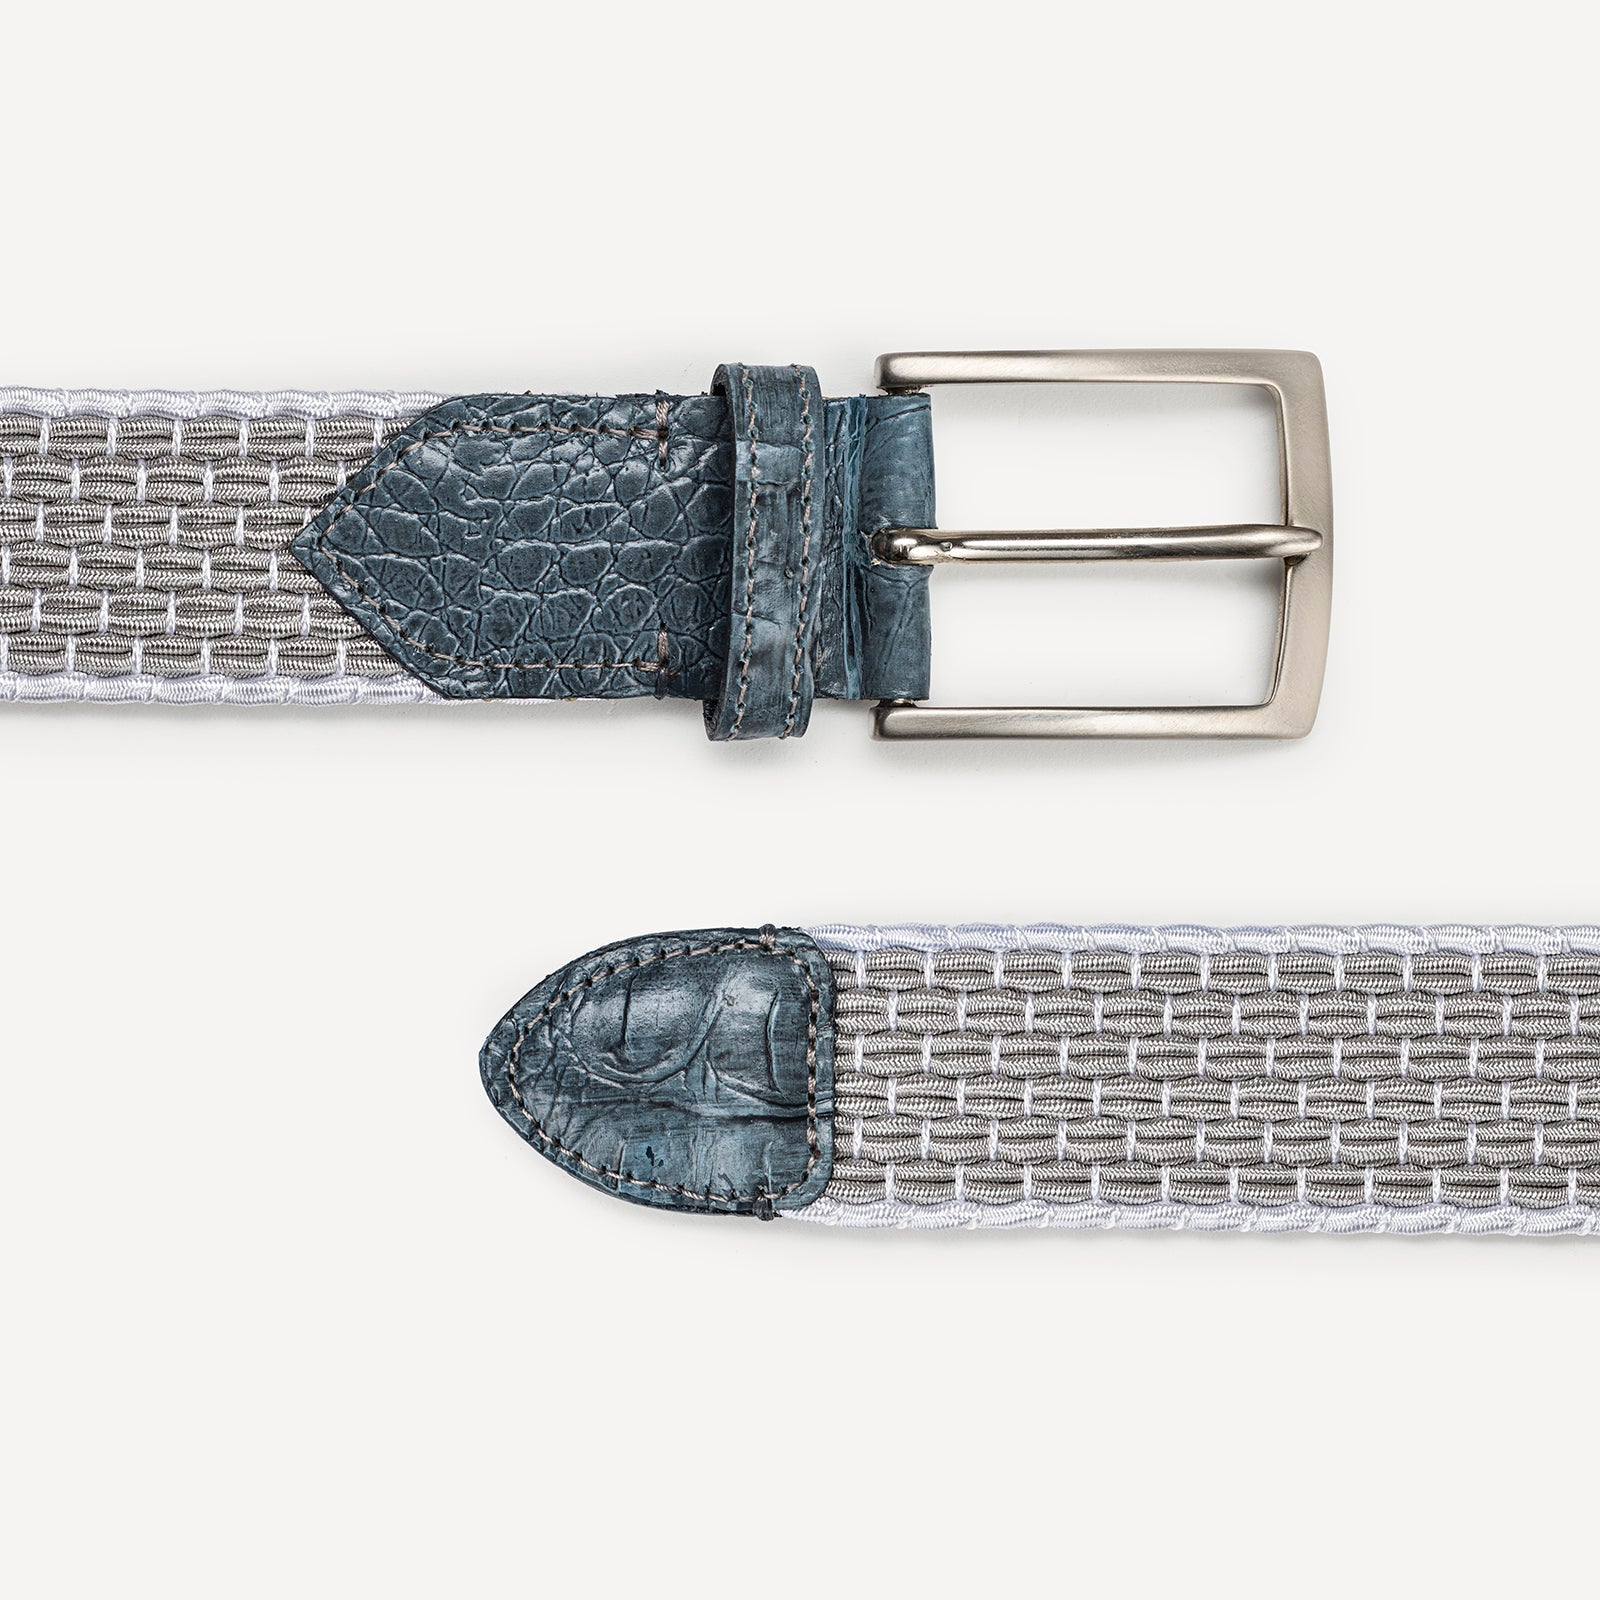 Belt 14/20 bicolor 100% Capri light grey and white leather belt